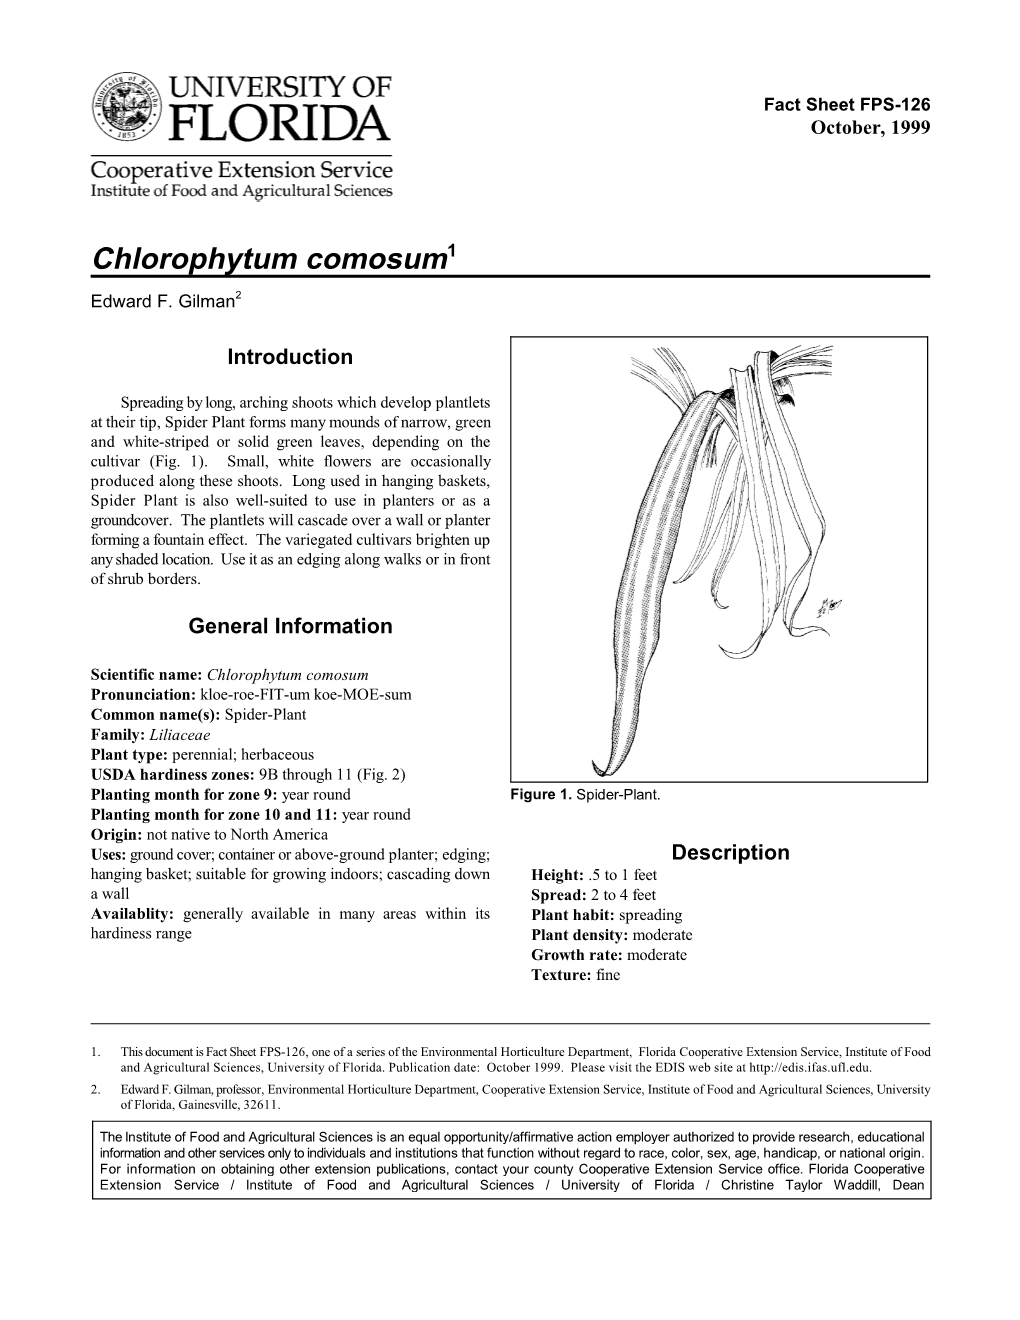 Chlorophytum Comosum -- Spider-Plant Page 2